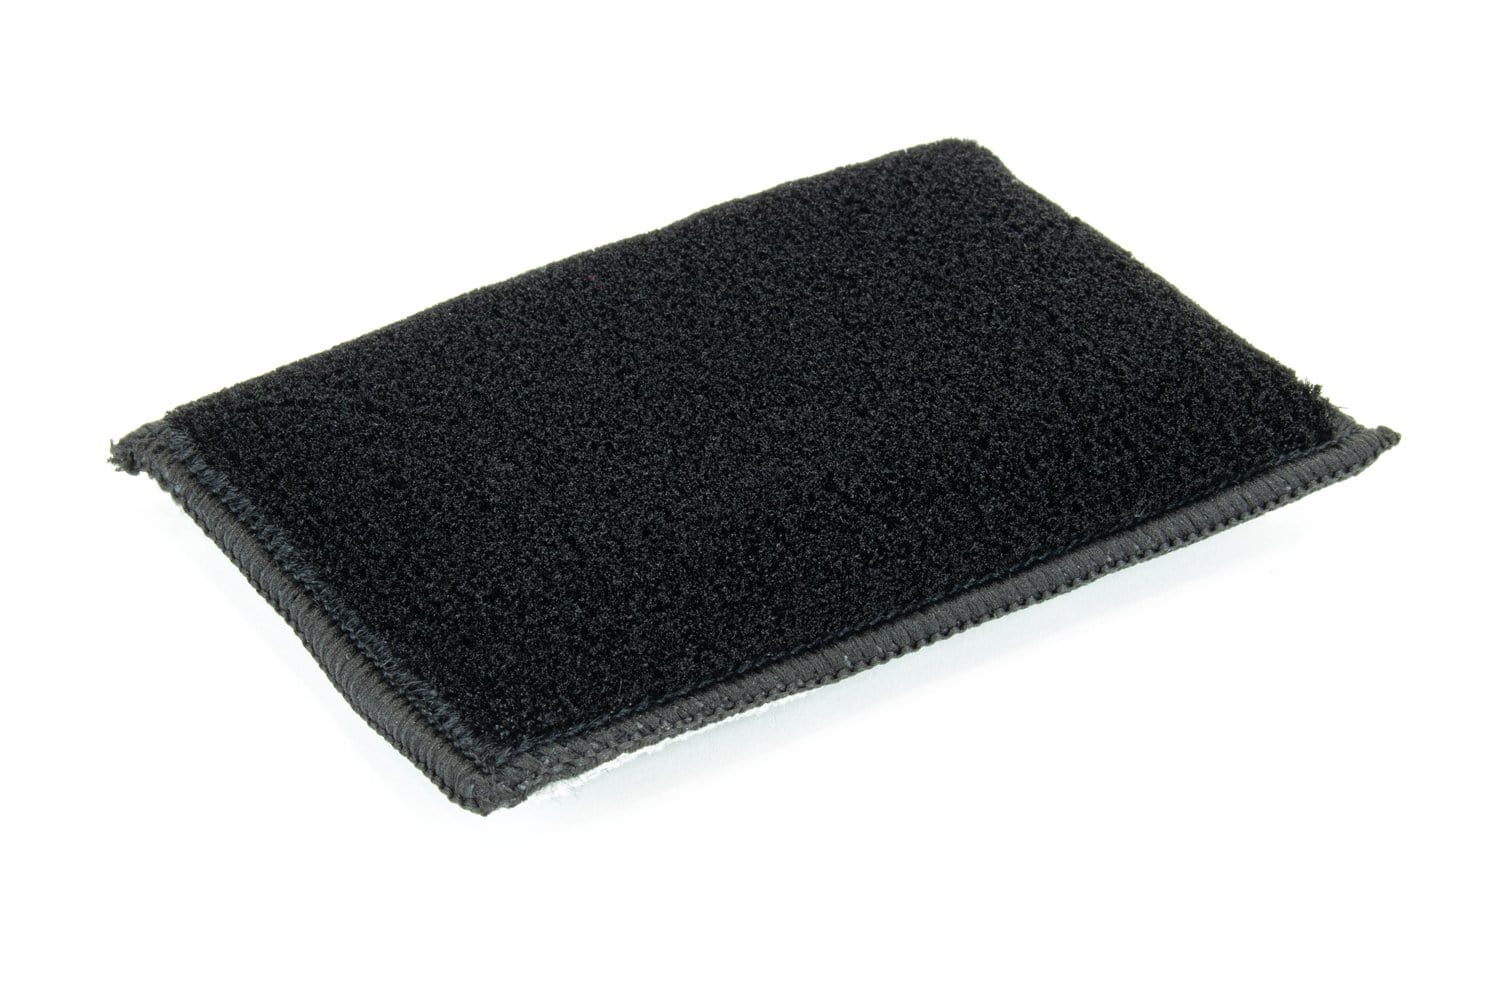 VIKING Tire Shine Applicator Sponges, Multi-Purpose Mesh and Microfiber  Applicator Pad for Car Detailing, Blue and Grey, 2 Pack